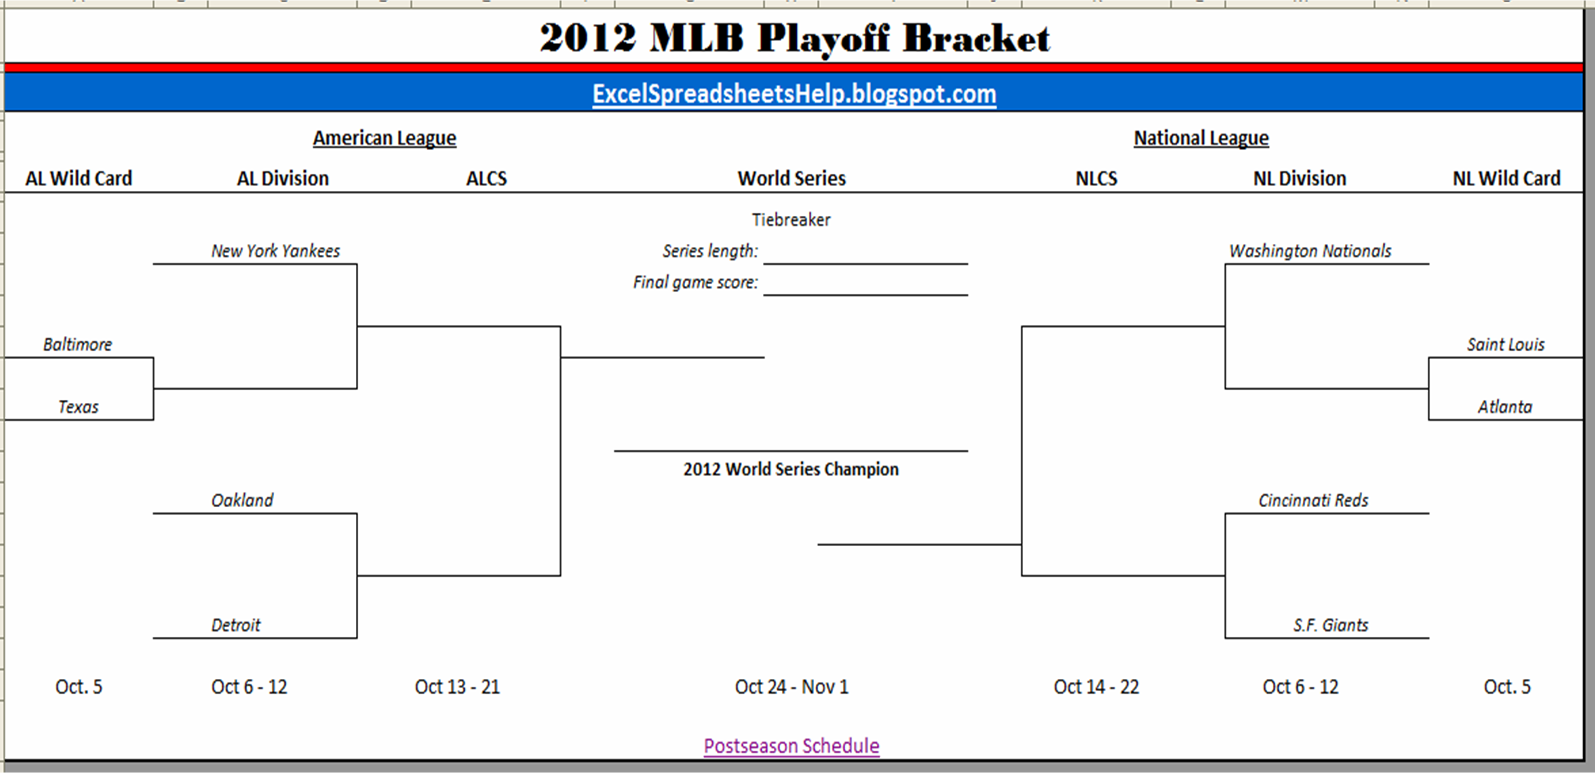 Excel Spreadsheets Help: Printable 2012 MLB Playoff Bracket